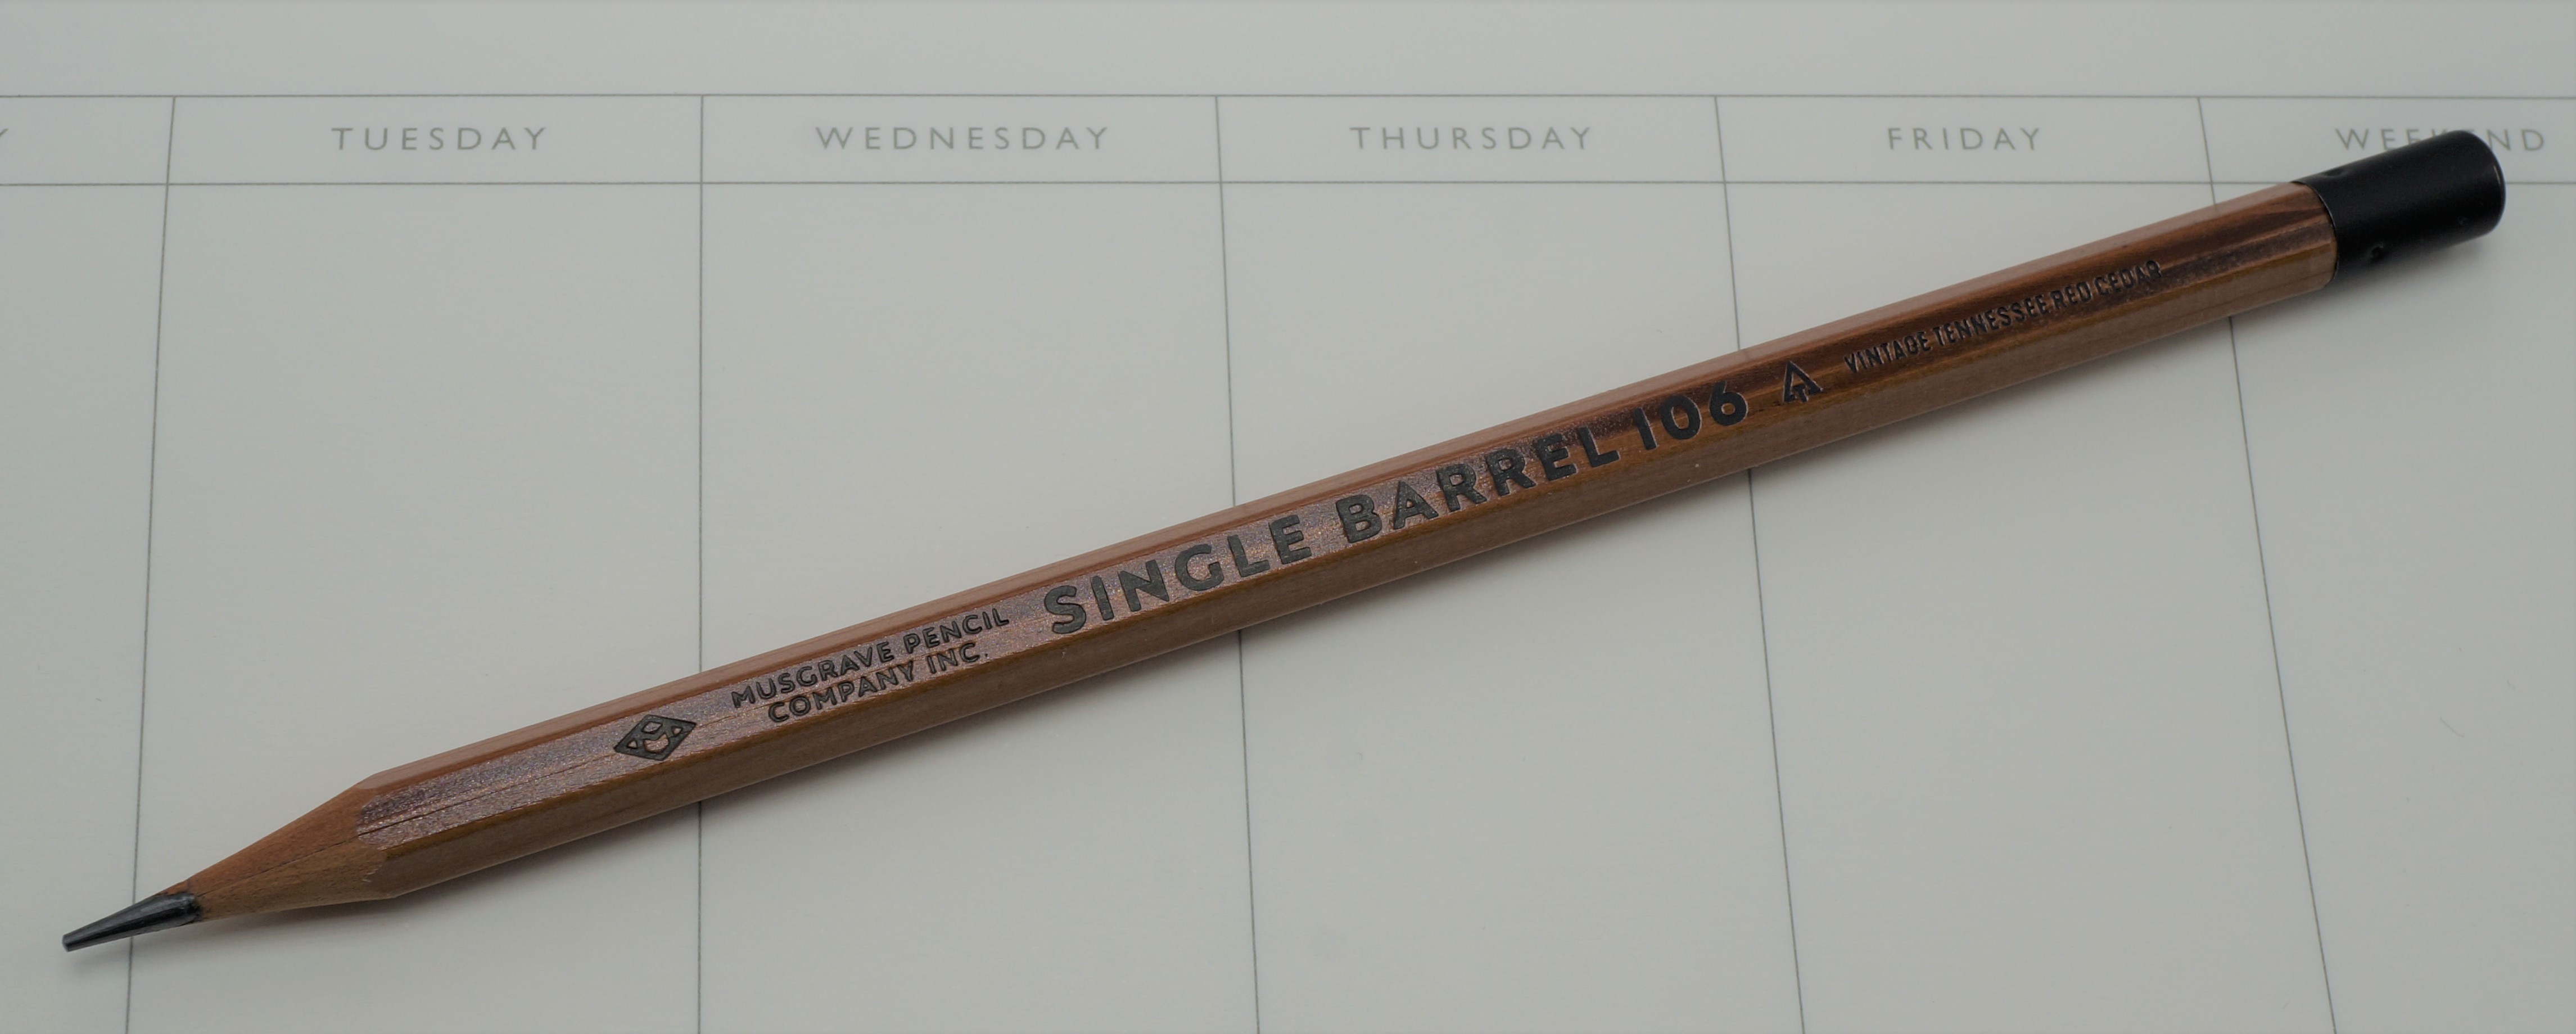 Musgrave Single Barrel 106 pencil